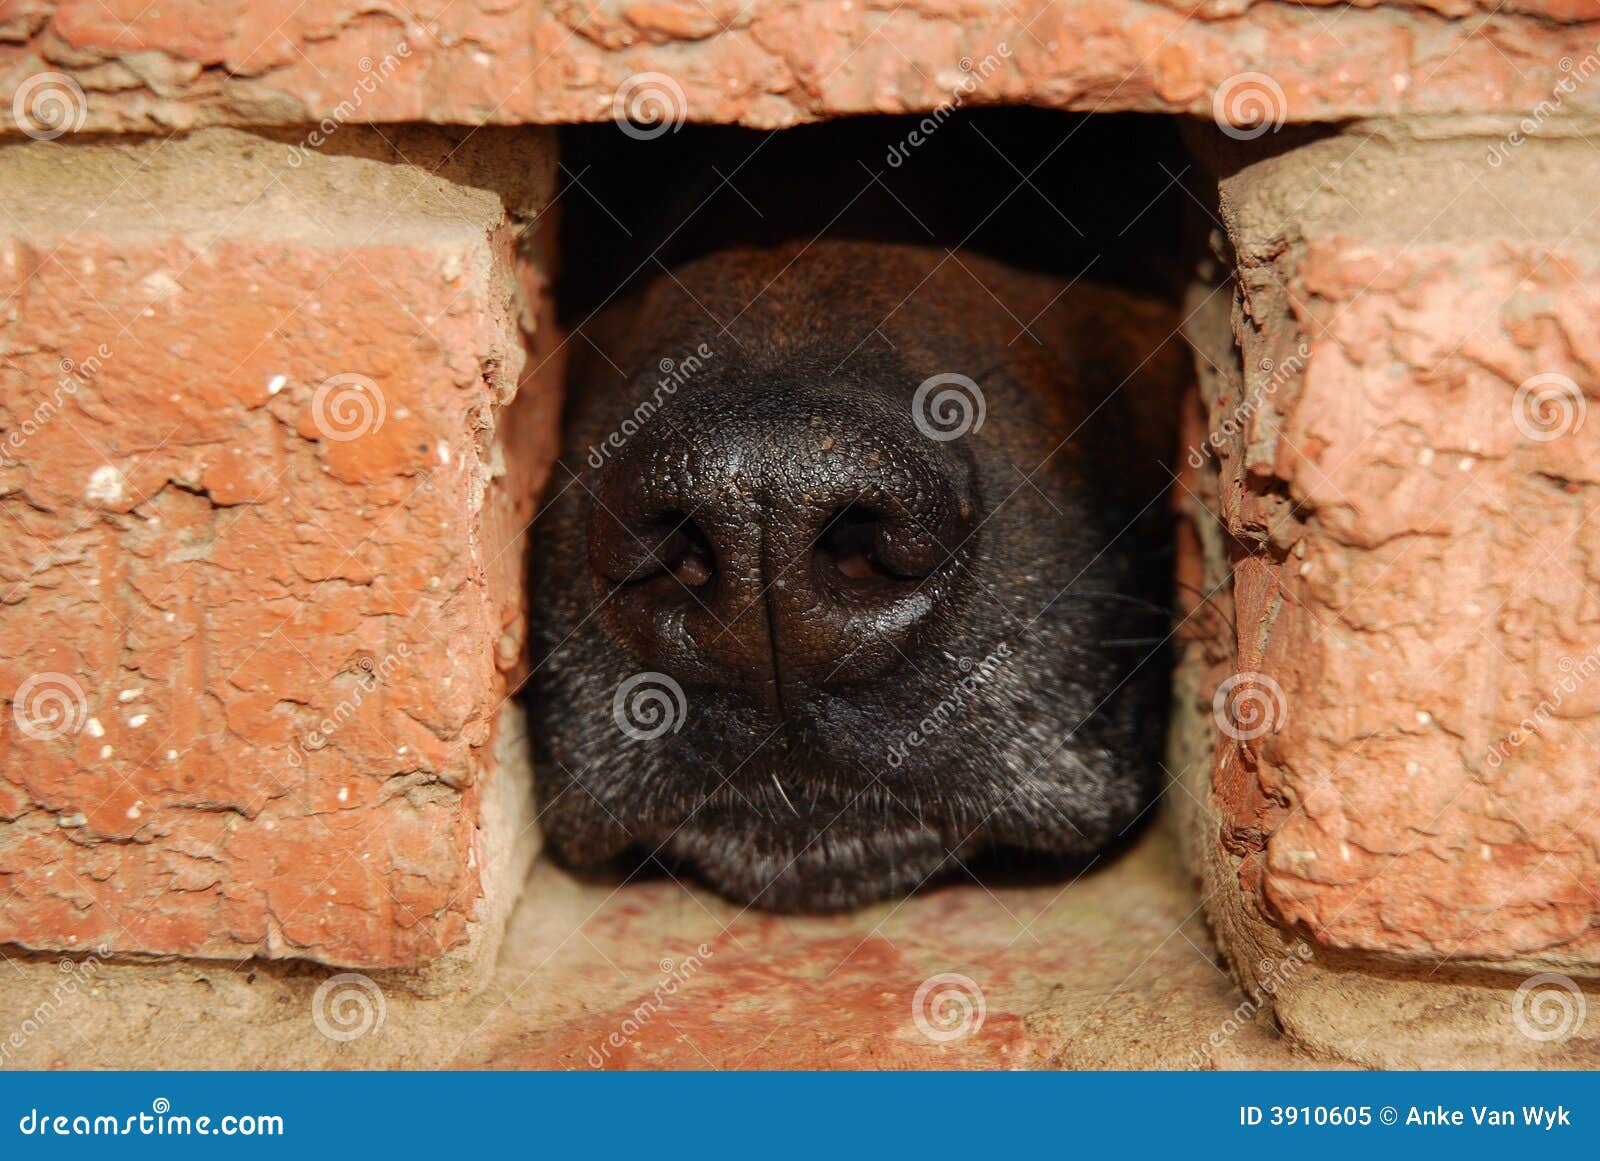 Dog nose close stock image. Image of black, missing, animals - 3910605